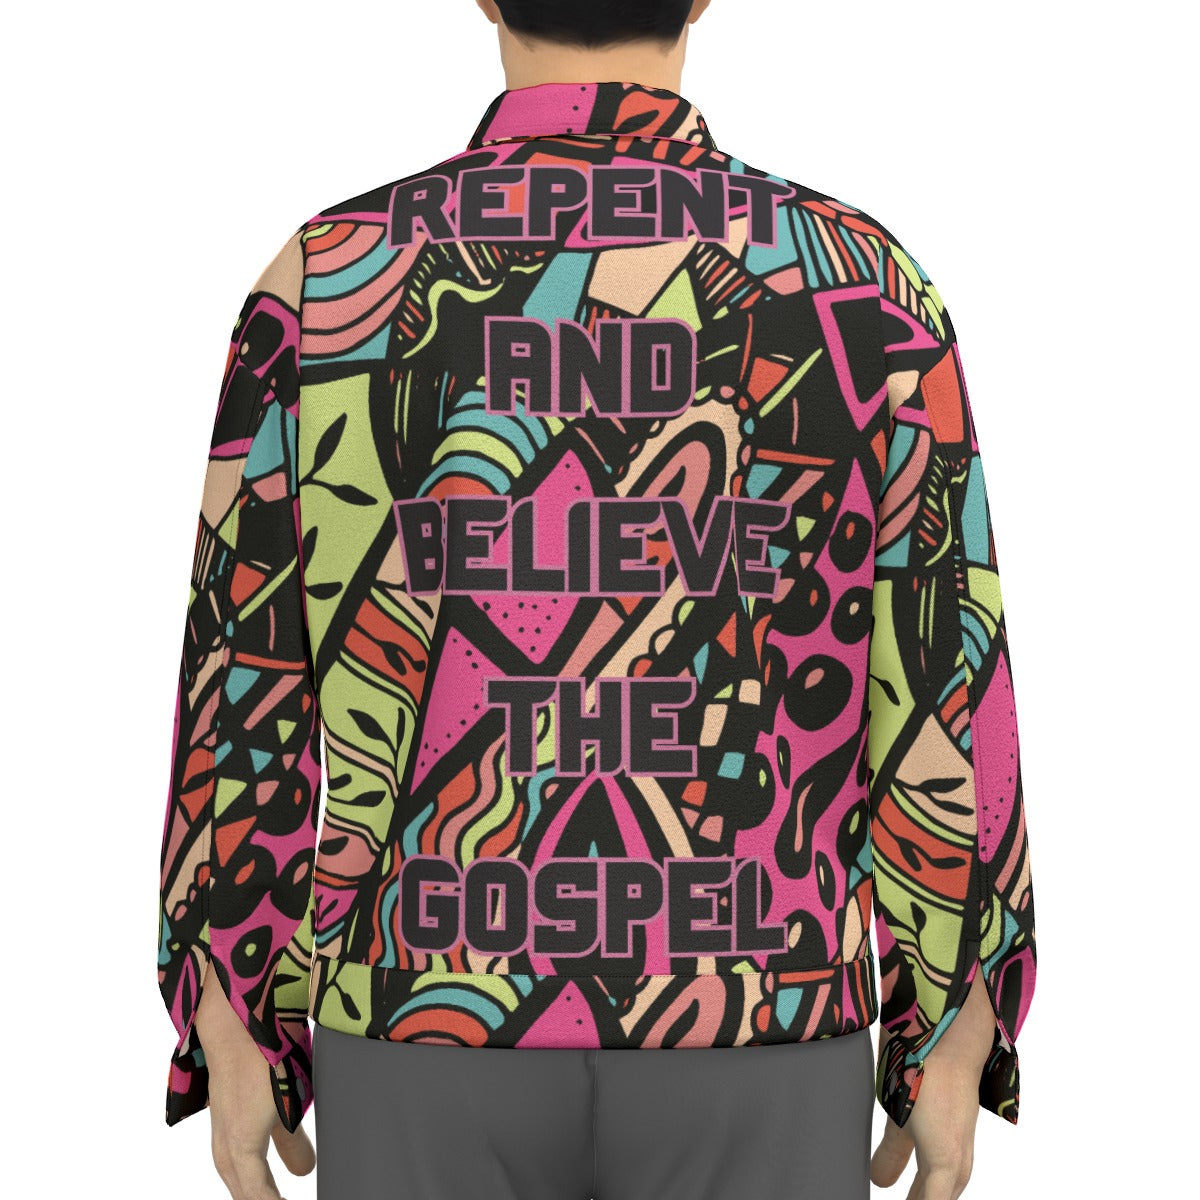 Repent and Believe the Gospel Lapel Jacket